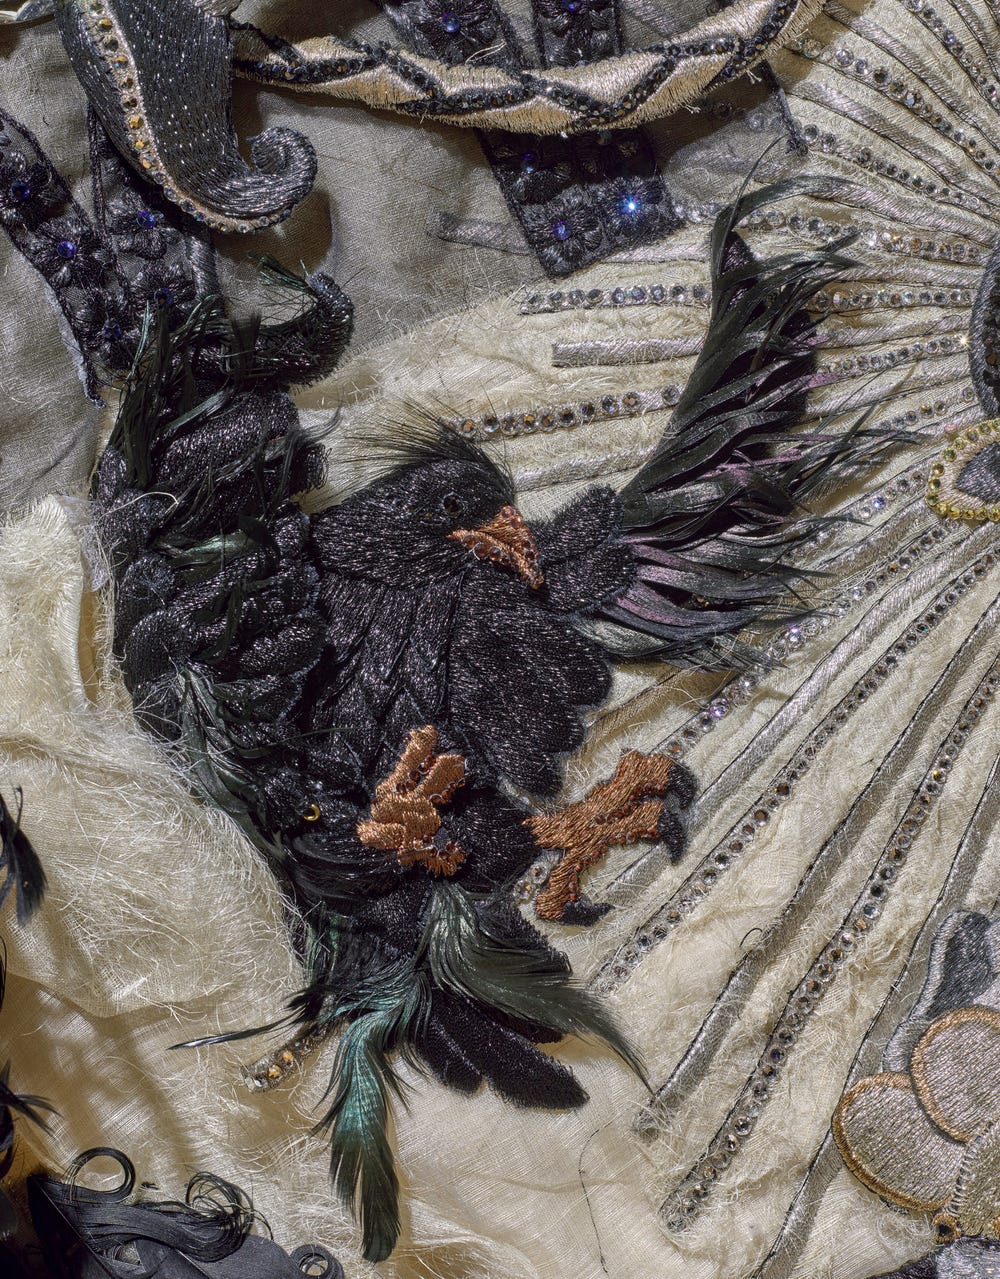 embroidered bird on Alternate Universe dress